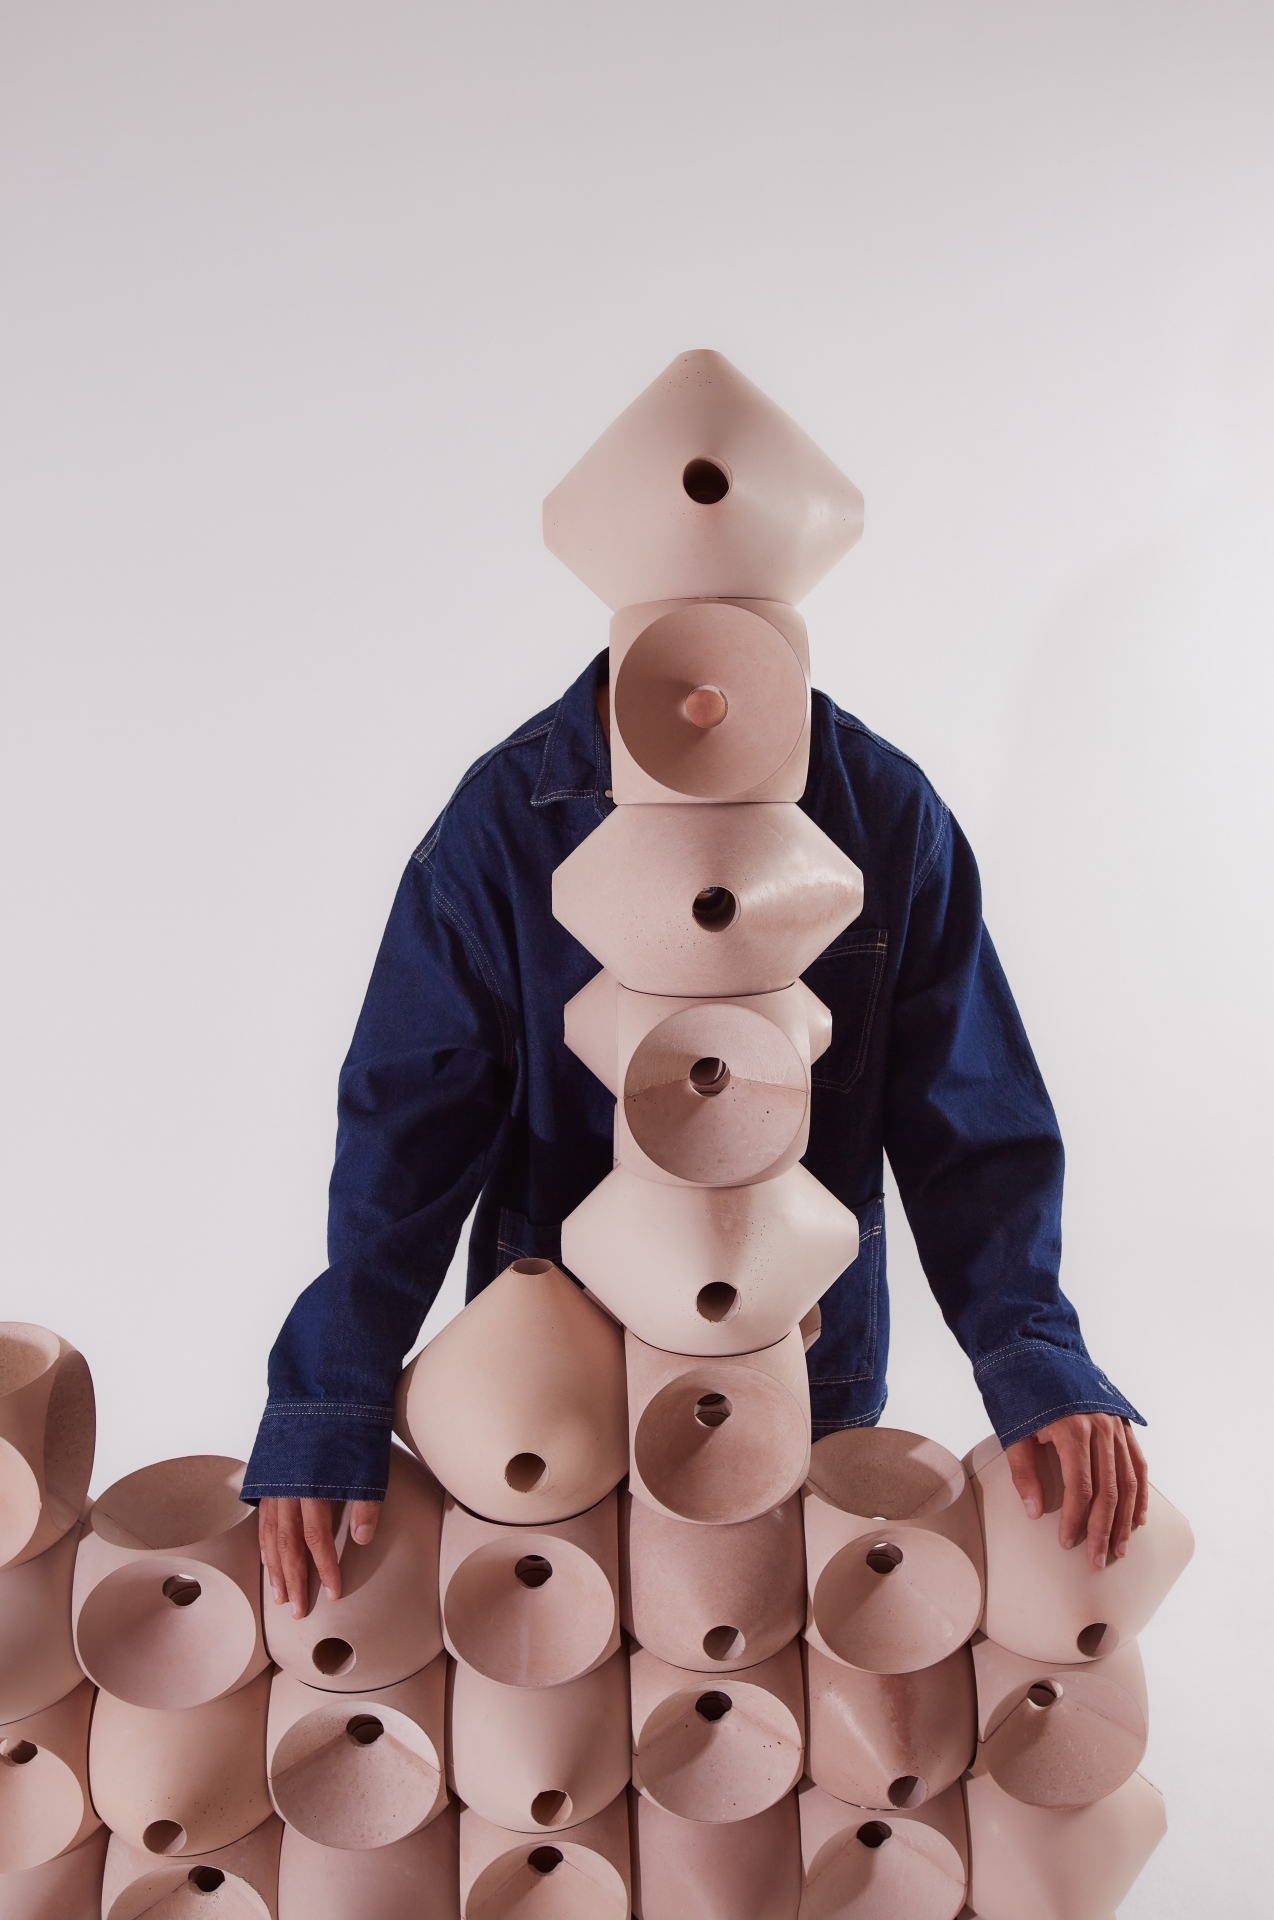 Eco-design studio Balance is Motion presents its innovative modular system Ruderal